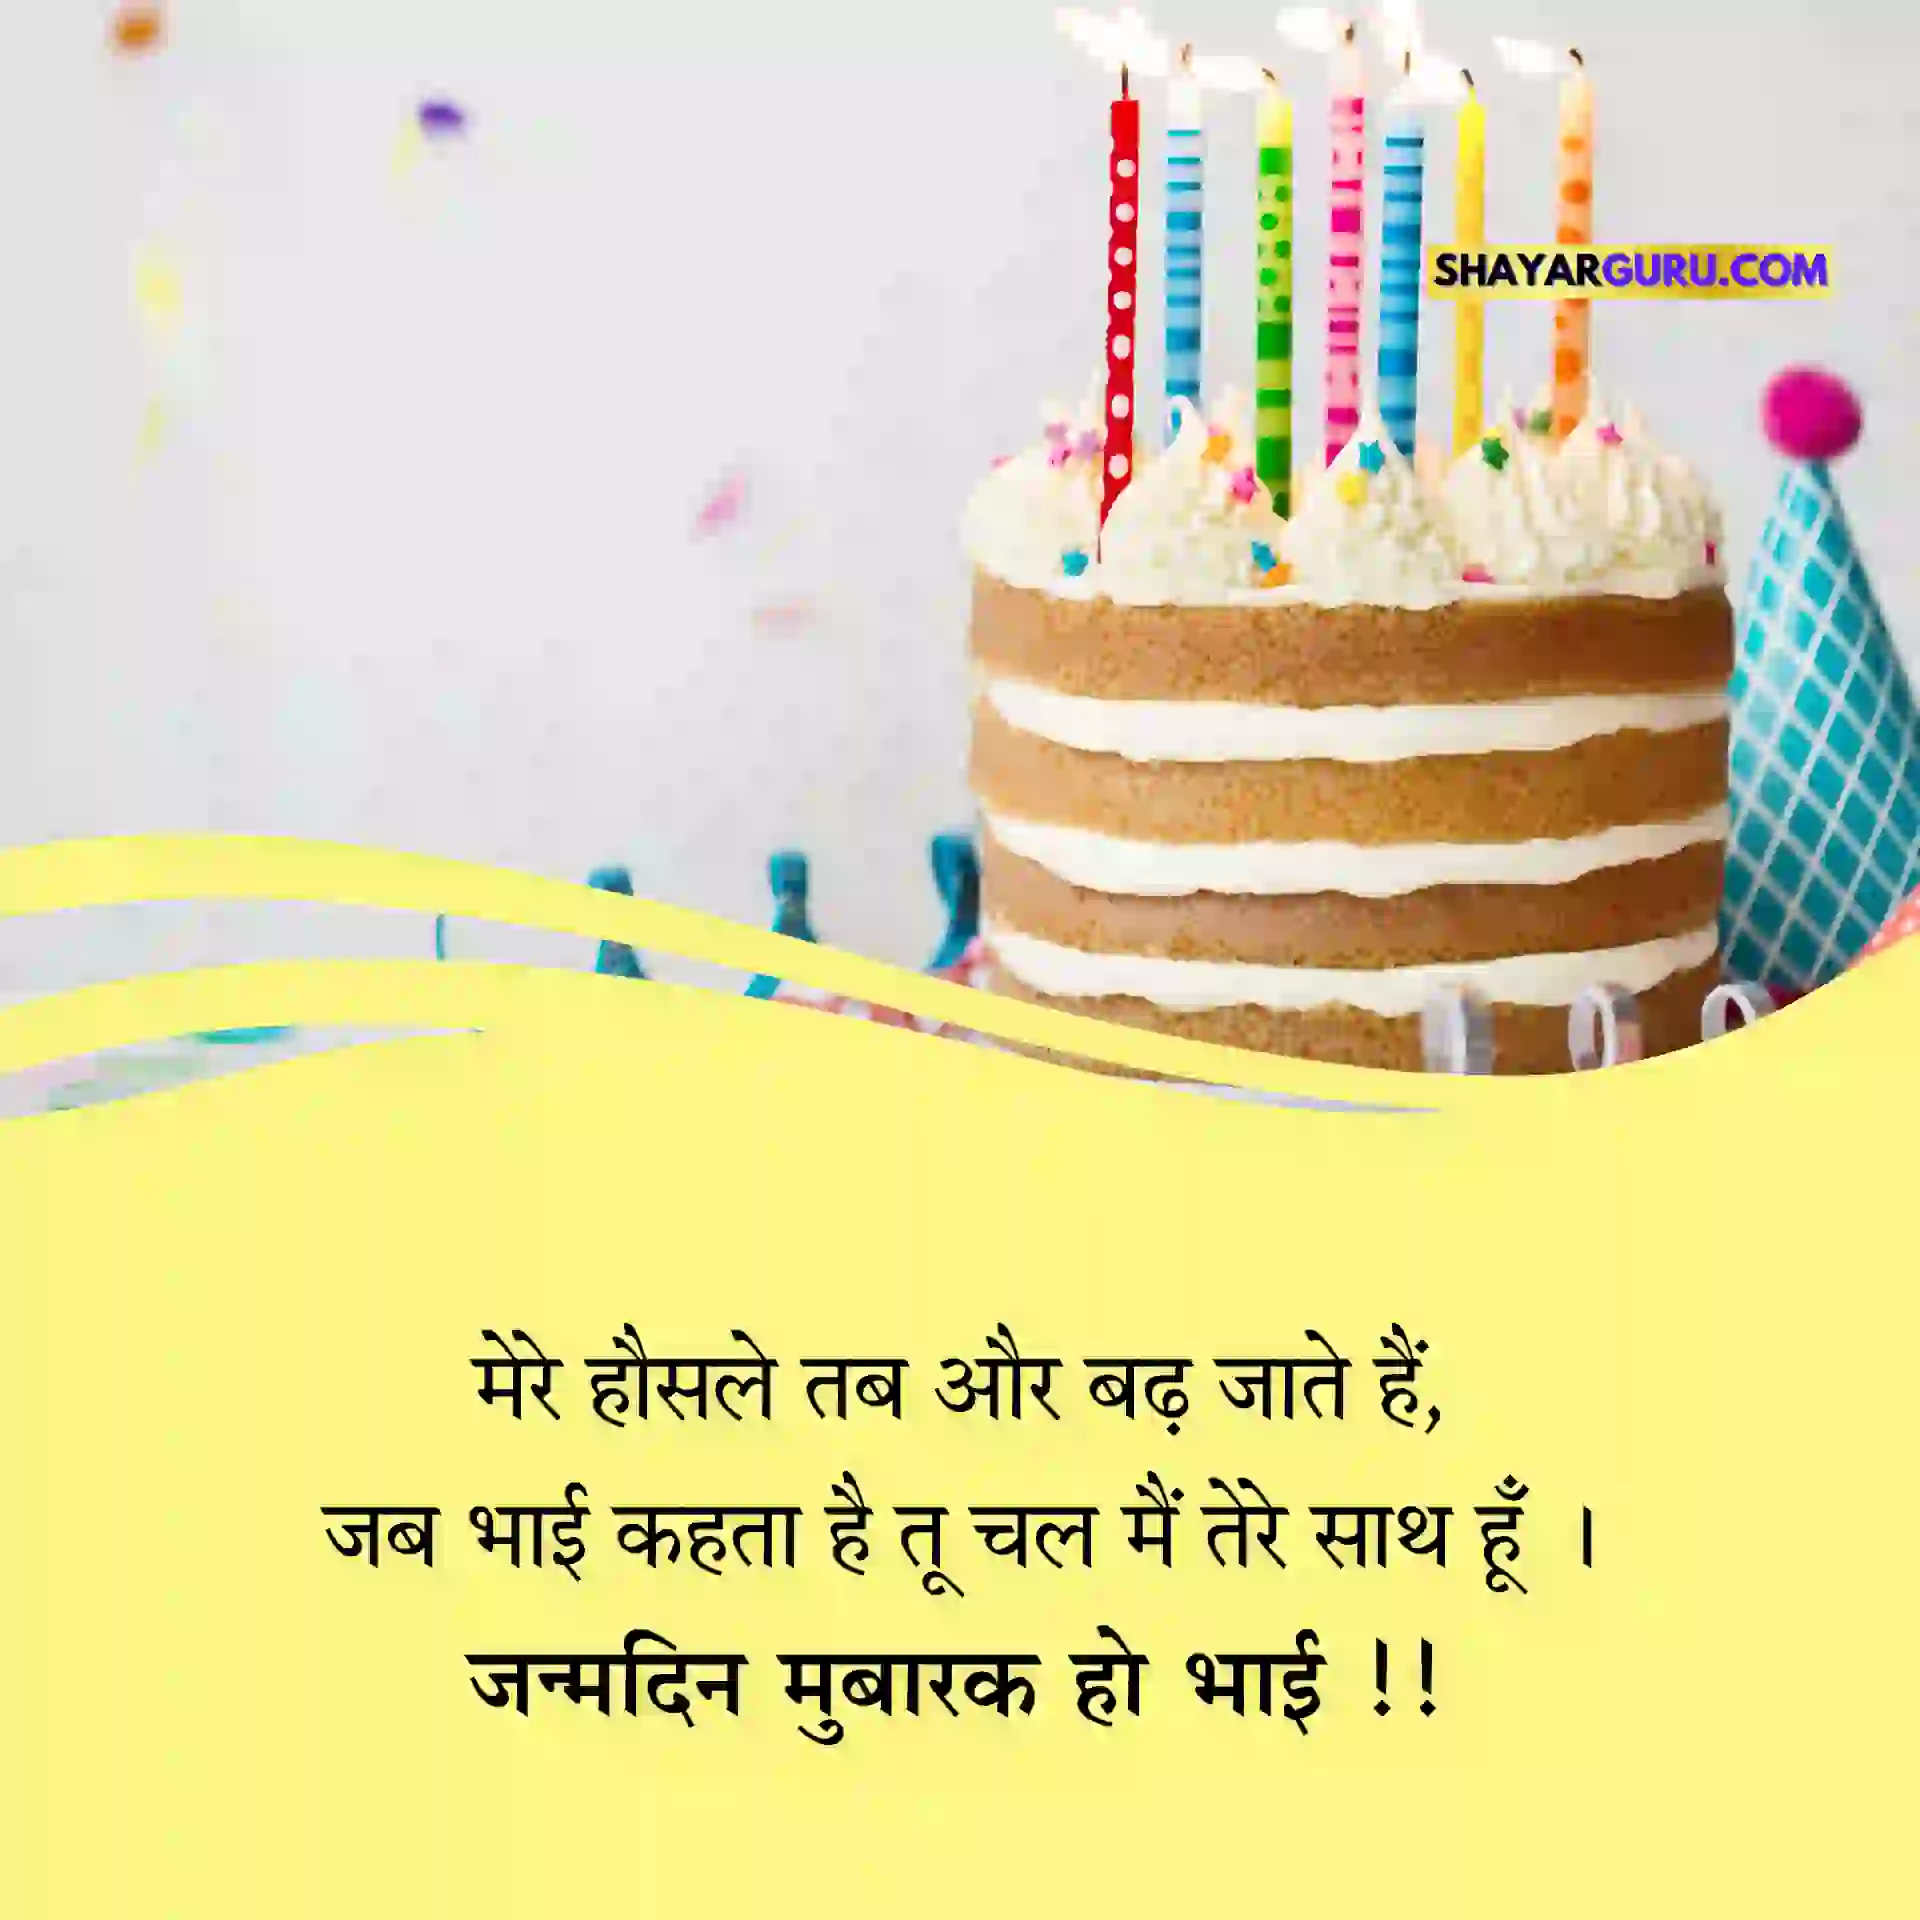 Happy Birthday To You Bhai